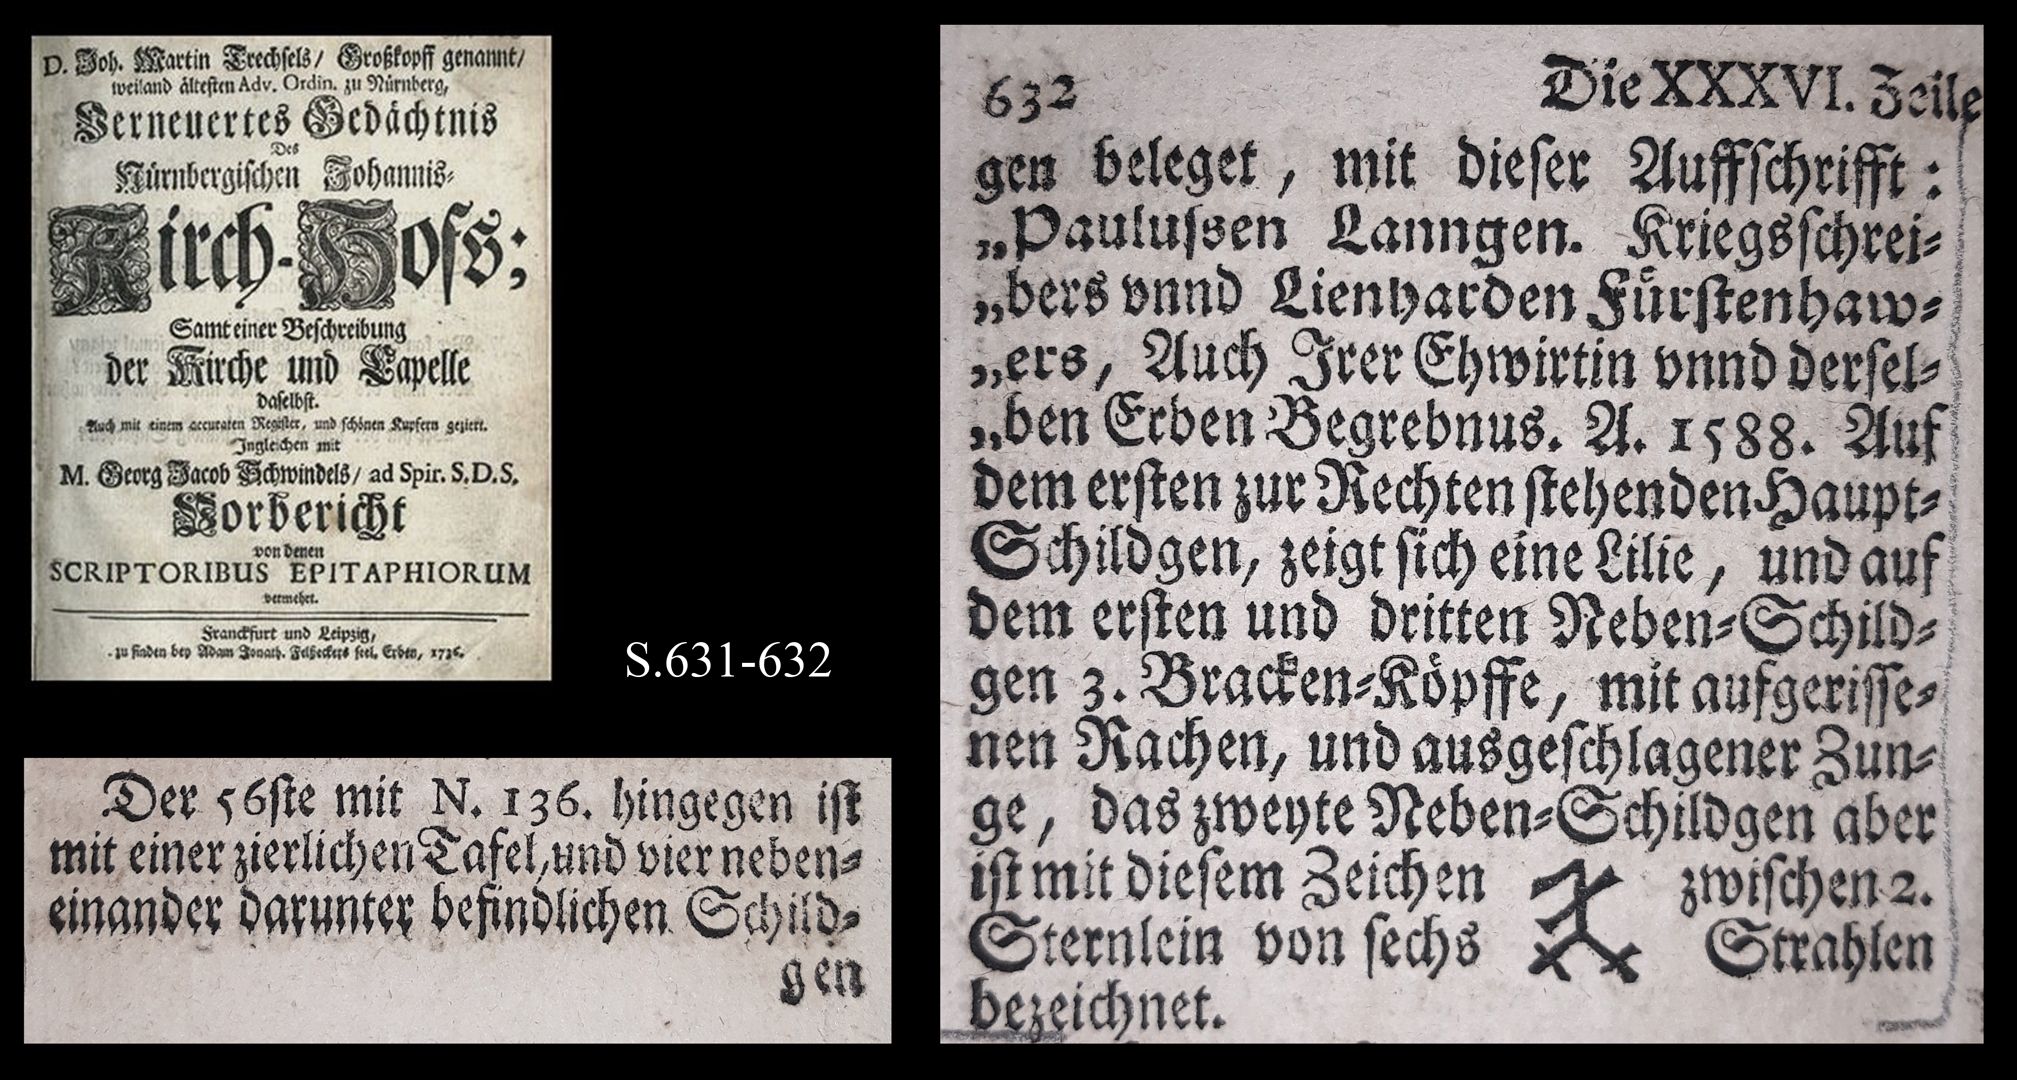 Epitaph of Lienhard Fürstenauer Excerpt from Joh. Martin Trechsels, called Großkopf: "Renewed memory of the Nuremberg Johannis Kirch Hof...", Franckf. & Leipzig 1735